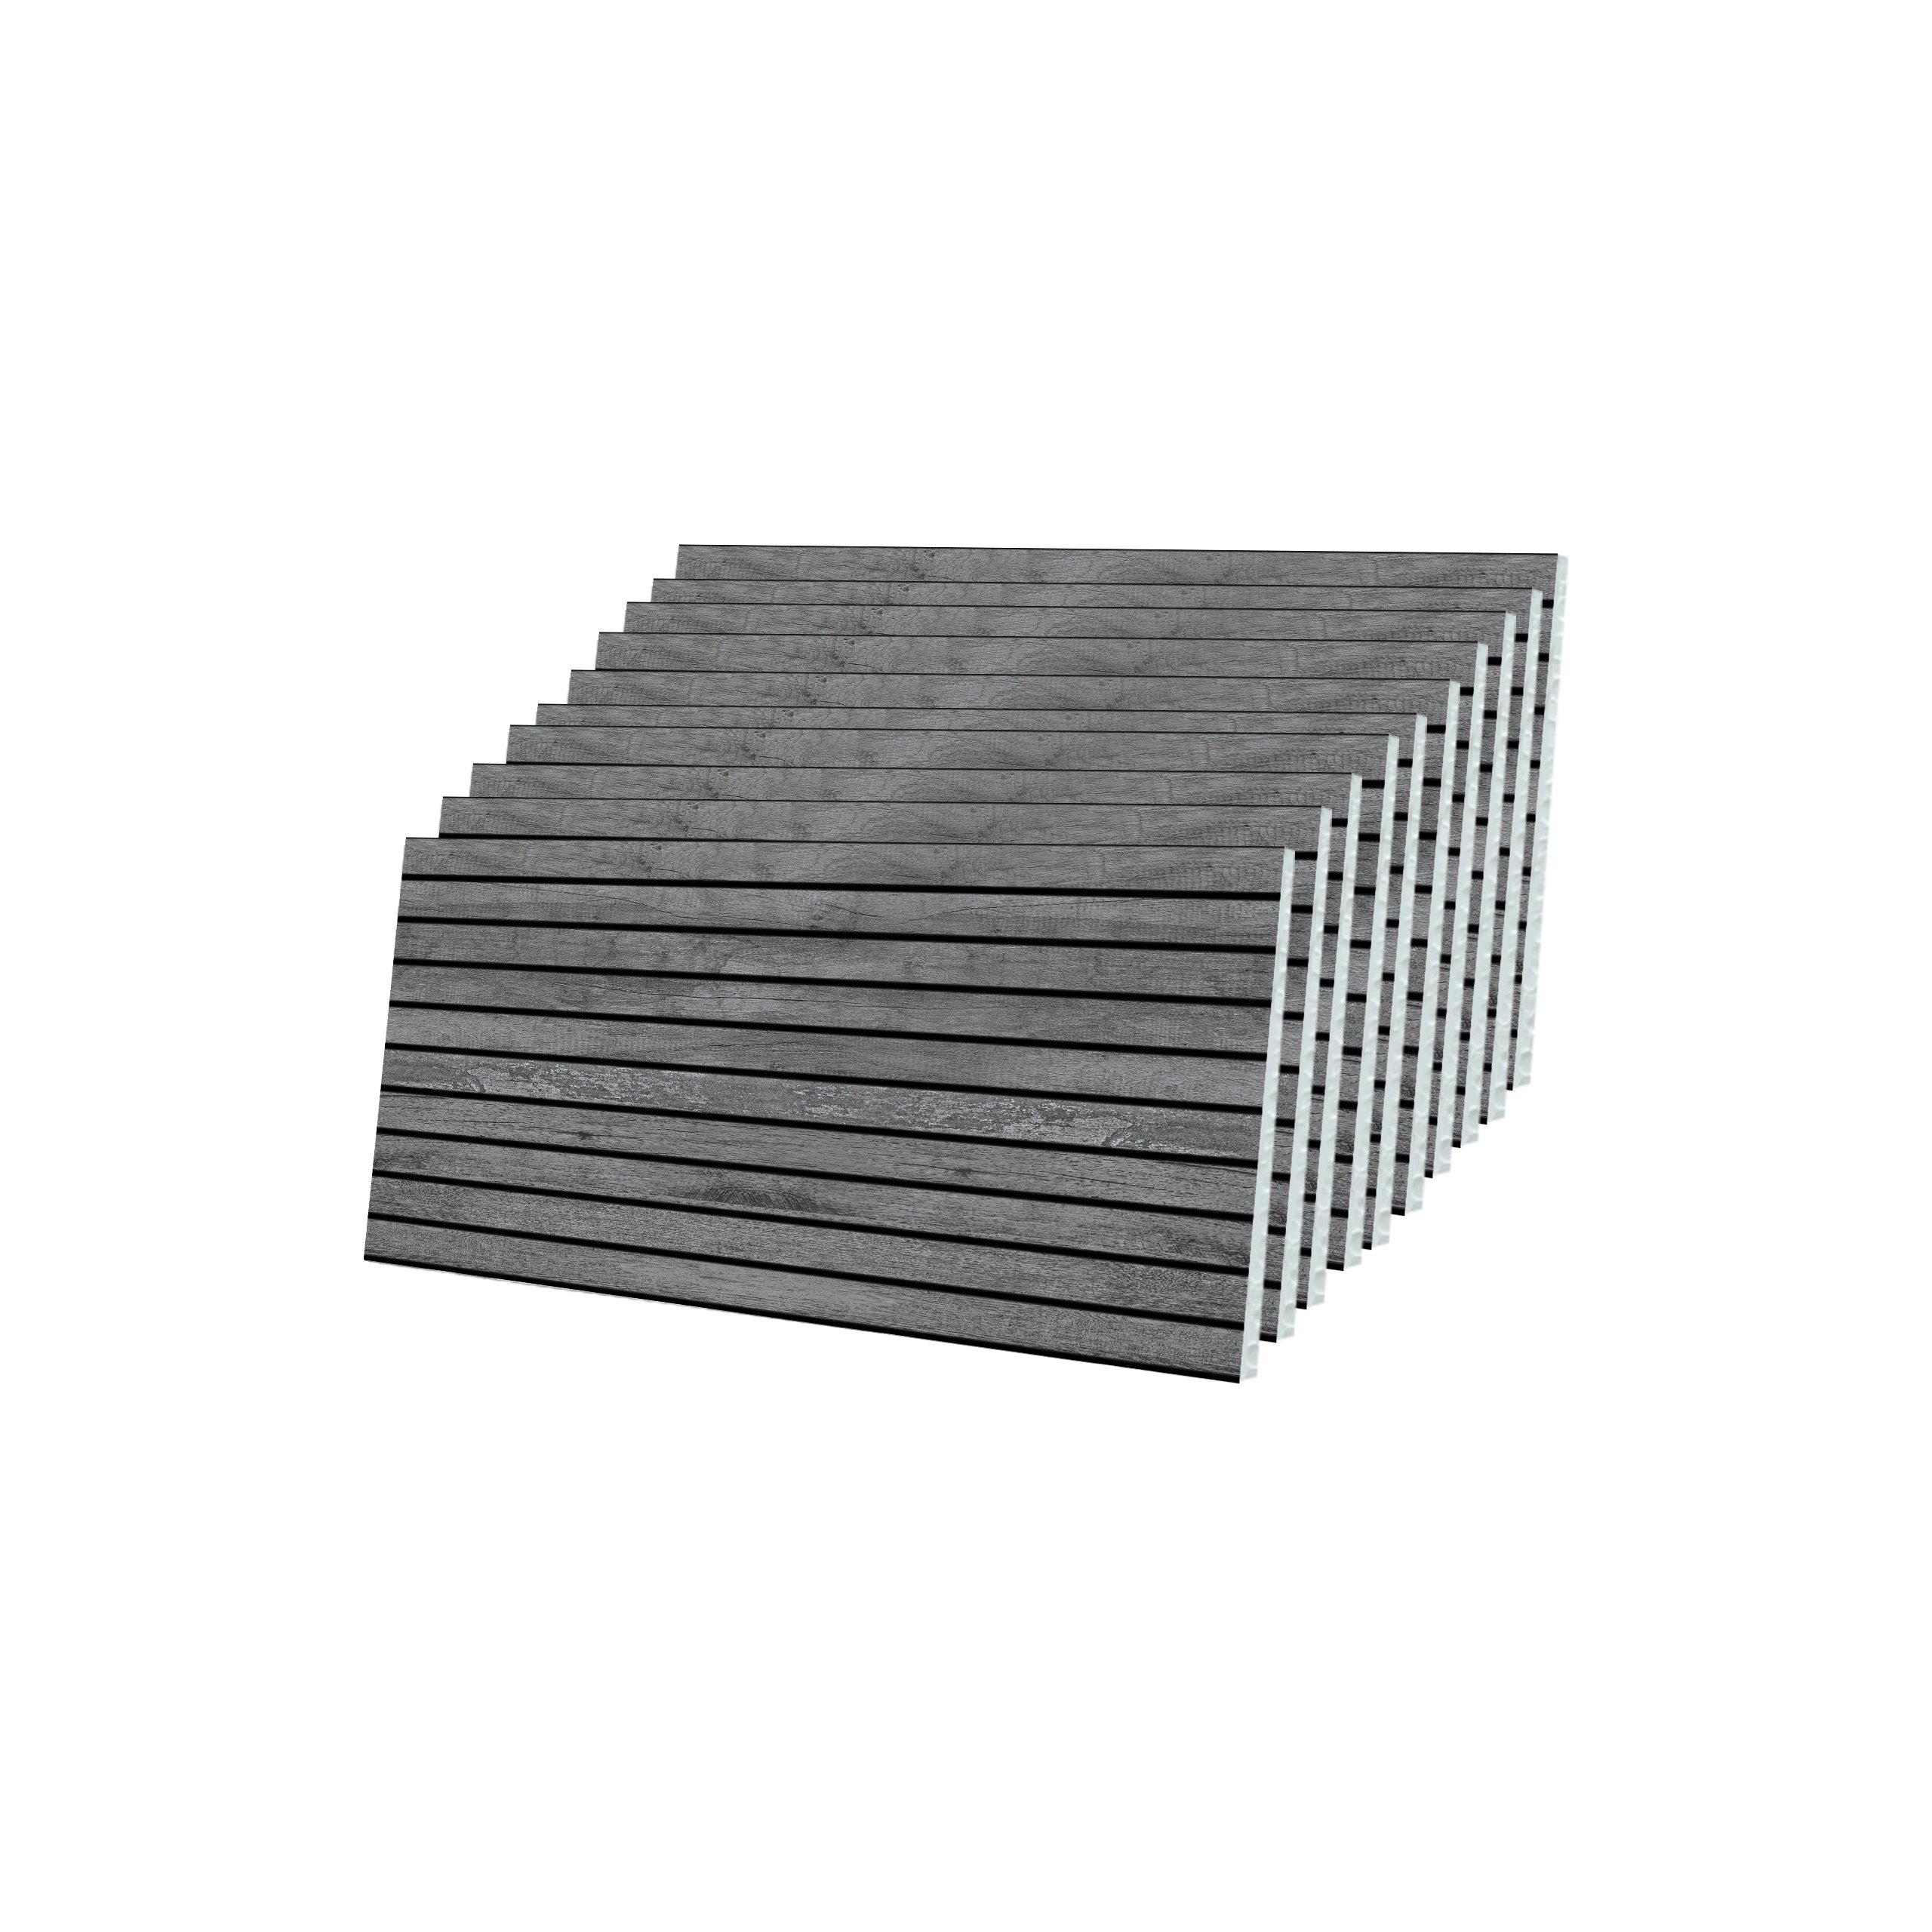 Cloudy Wood AP-21 3D Acoustic Wall Panels